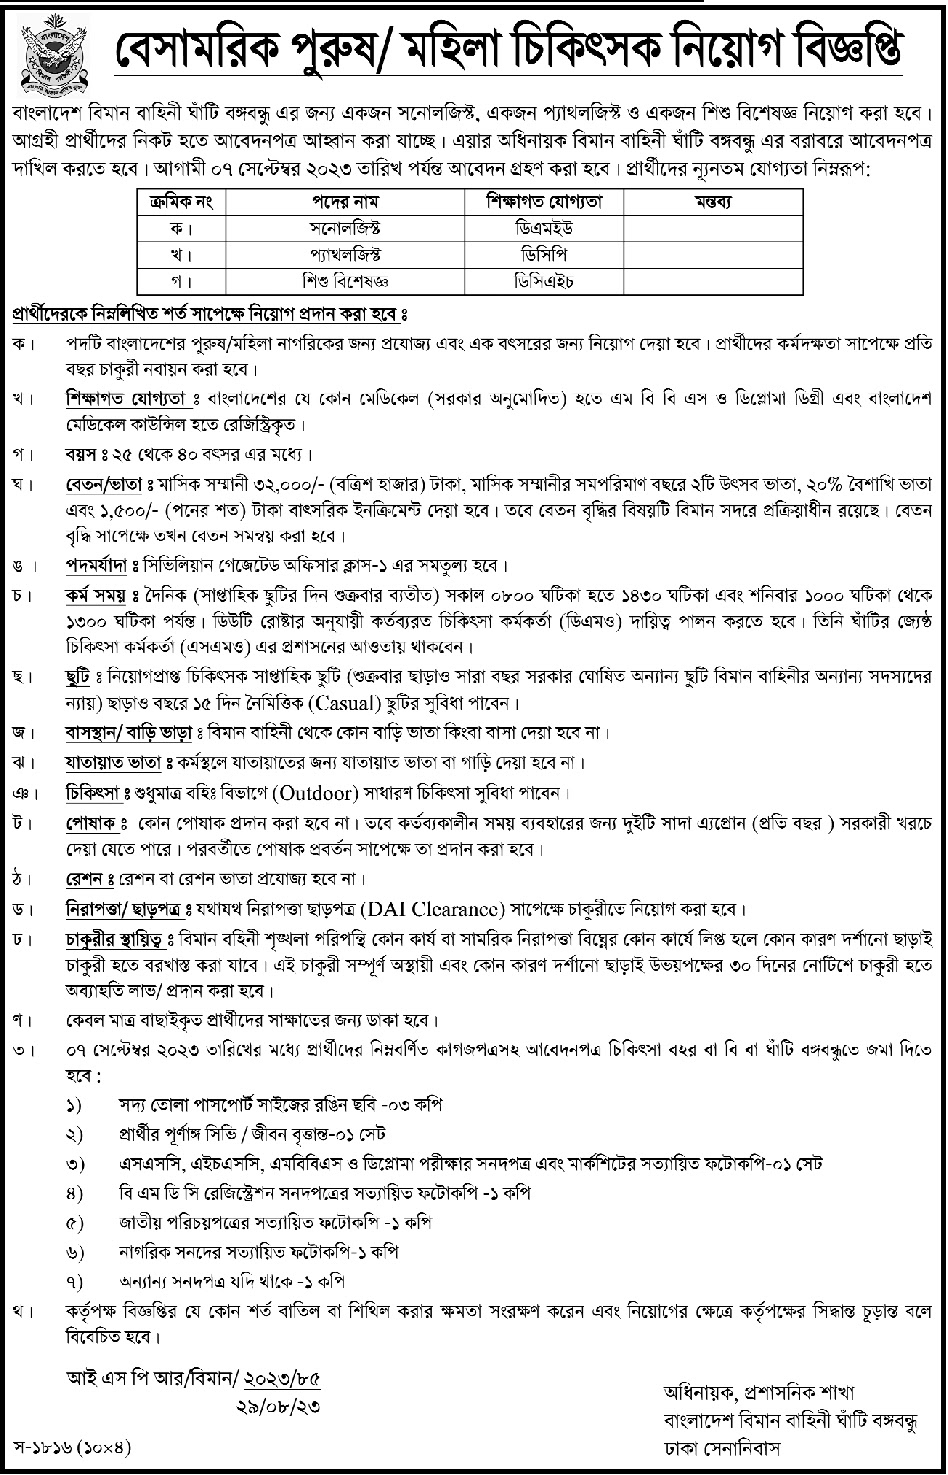 Bangladesh Air Force (BAF) Job Circular 2023 - বিমান বাহিনী নিয়োগ বিজ্ঞপ্তি ২০২৩ -Air Force Recruitment Circular 2023 - বেসামরিক বিমান বাহিনী নিয়োগ 2023 - bangladesh air force civil job circular 2023 - বিমান বাহিনী সৈনিক নিয়োগ 2023 - Bangladesh Air Force Soldier Job Circular 2023 - ajker chakrir khobor 2023 - আজকের চাকরির খবর ২০২৩ - Today Job Circular 2023